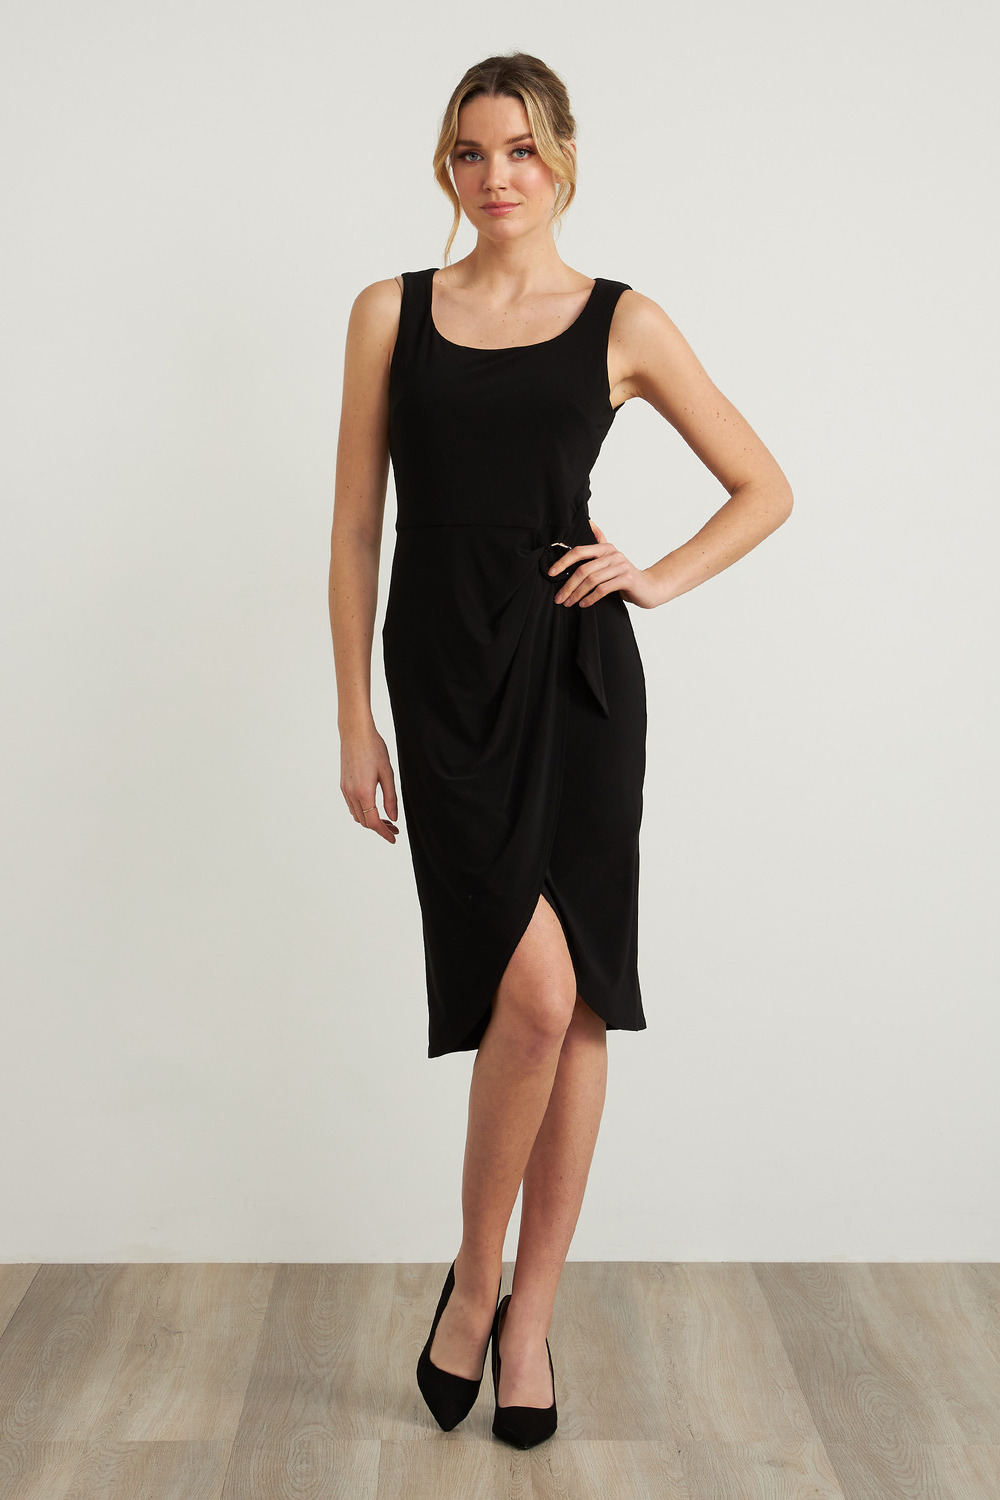 Joseph Ribkoff Ring Accent Dress Style 212265. Black